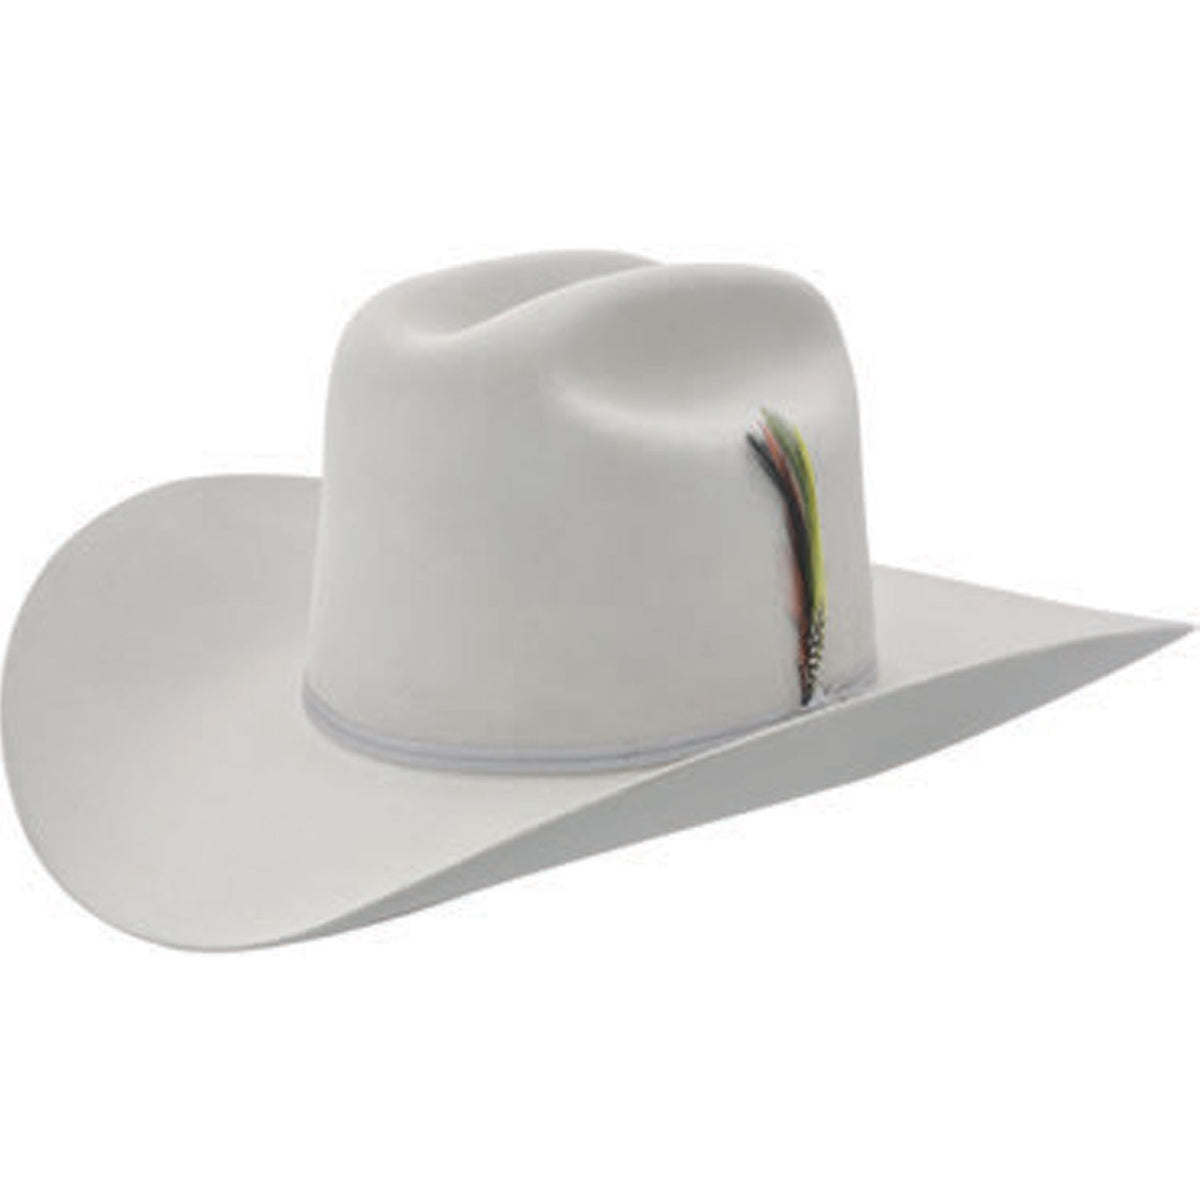 Stetson Rancher 6X Premier Cowboy Hat